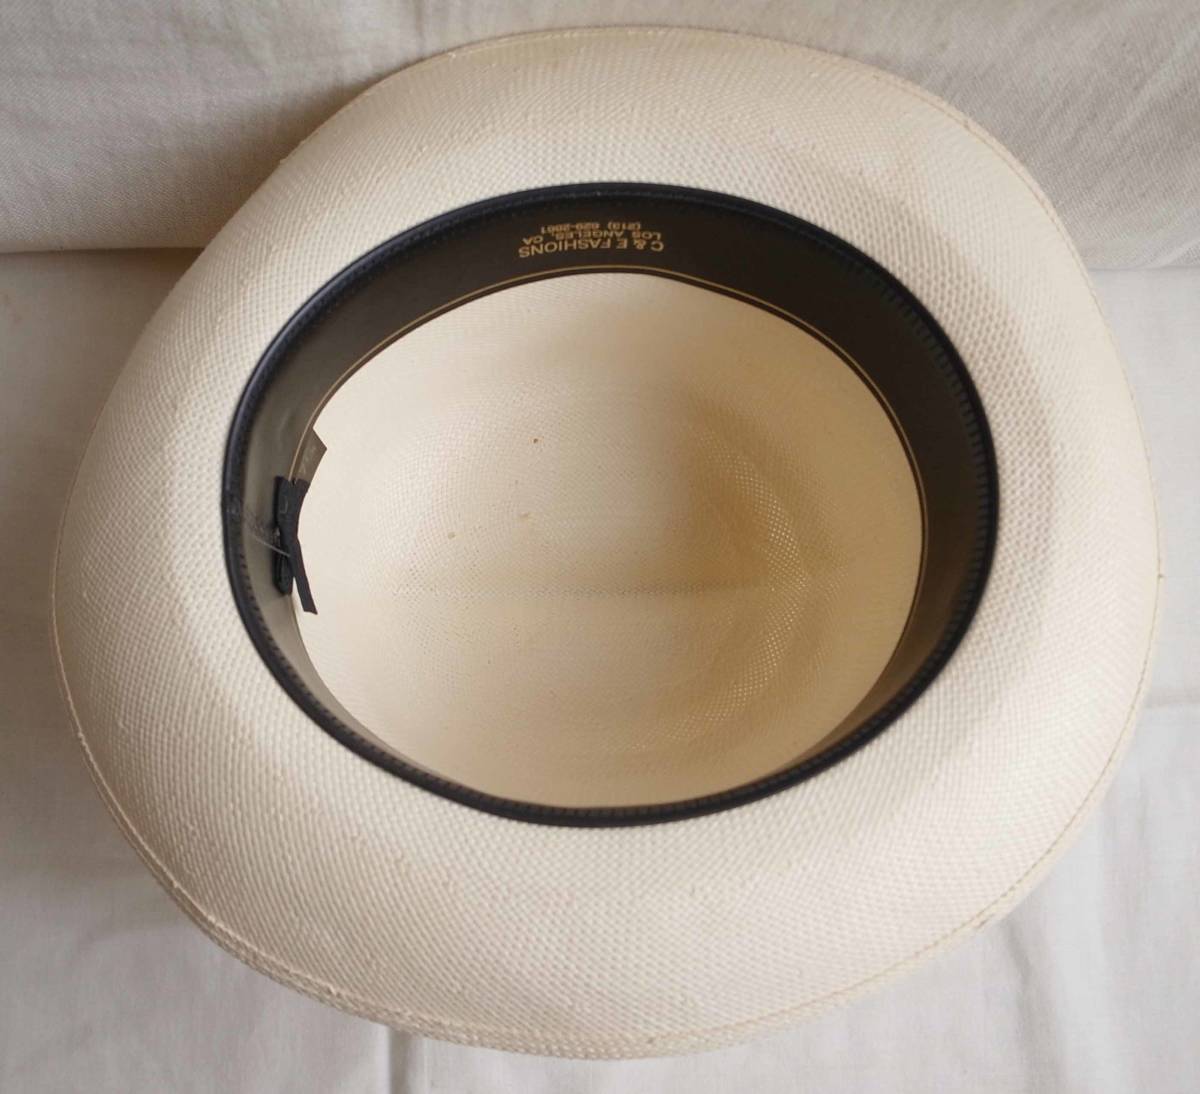 Dobbsdobs специальный заказ панама ma шляпа USA производства 57 шляпа 